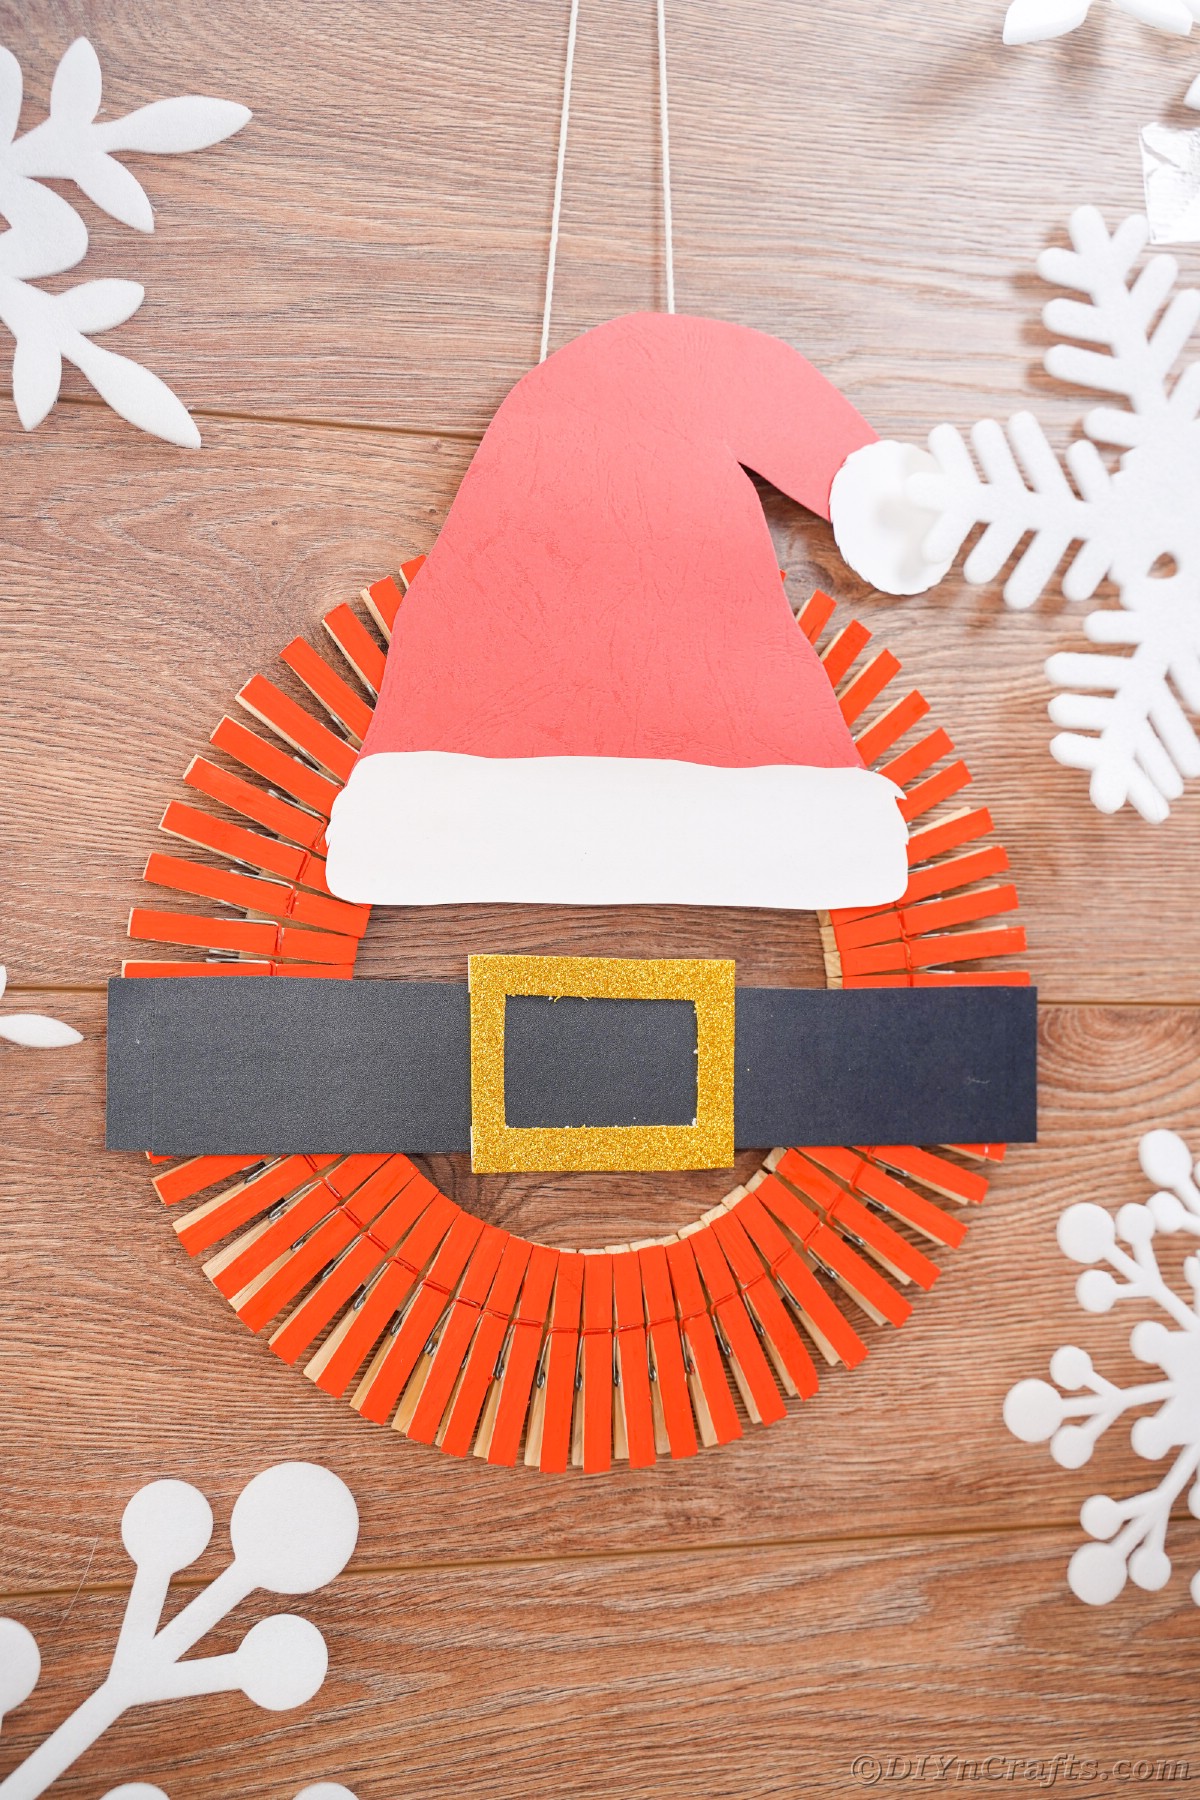 Wood surface behind santa belt and hat wreath